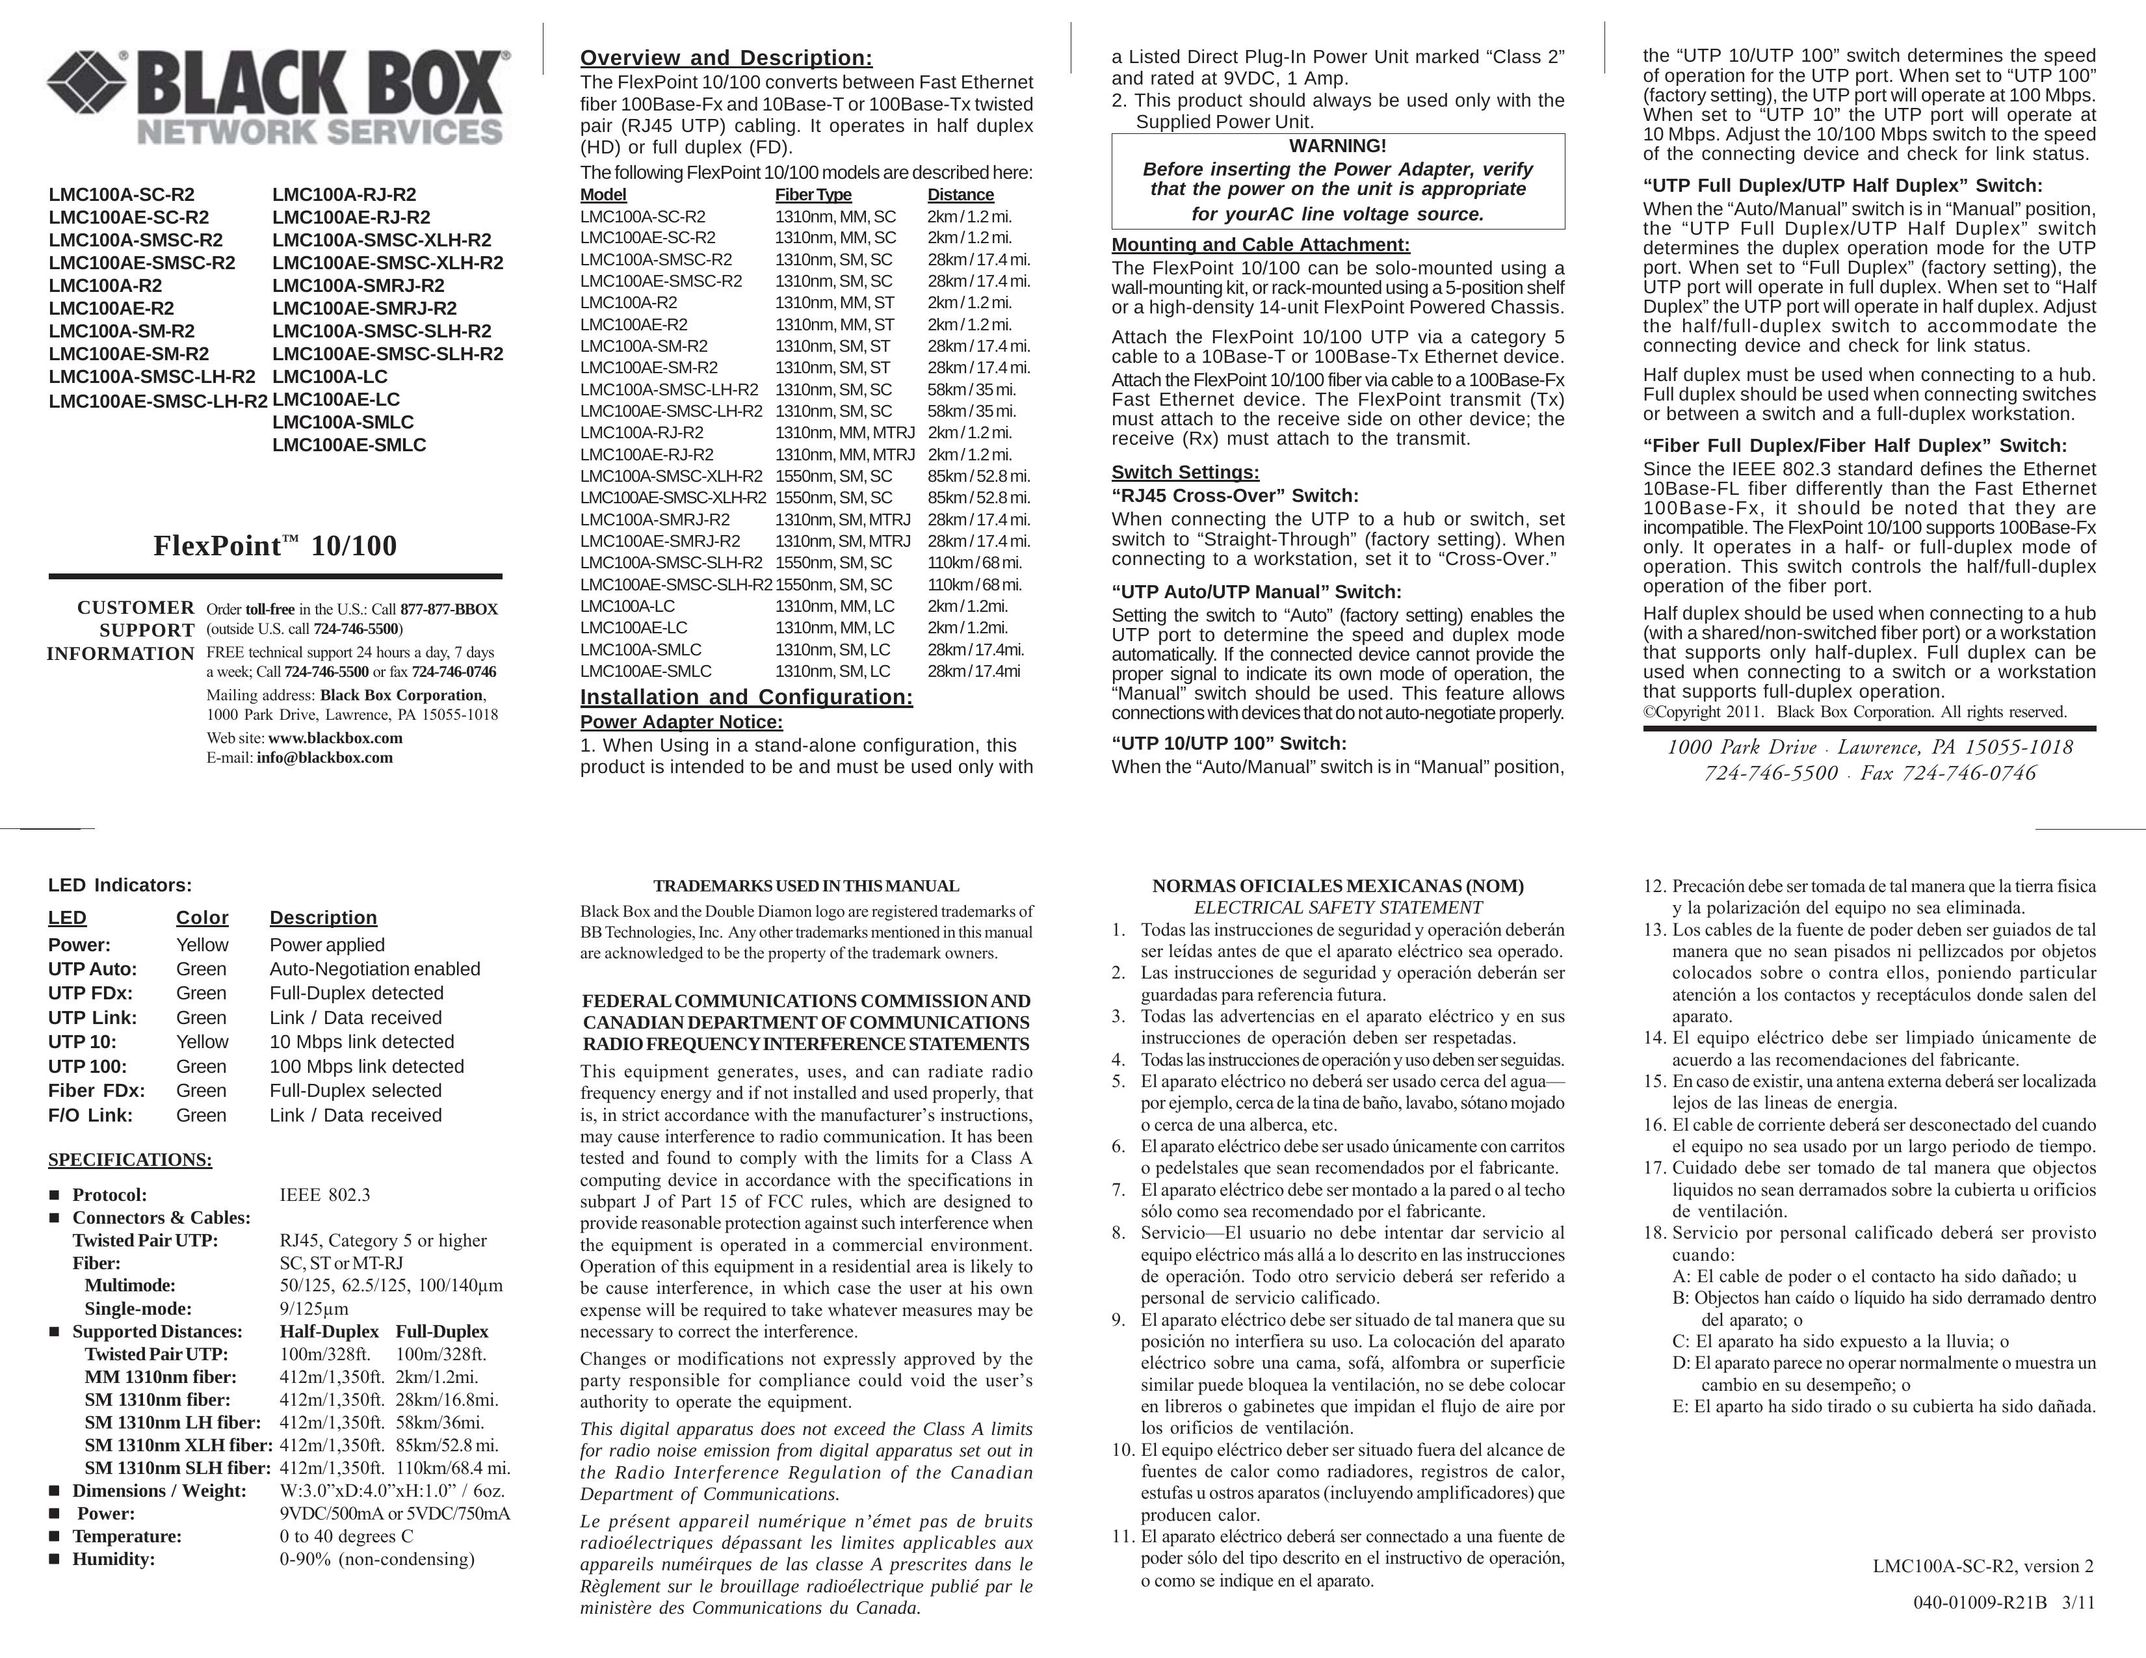 Black Box LMC100A-RJ-R2 Network Cables User Manual